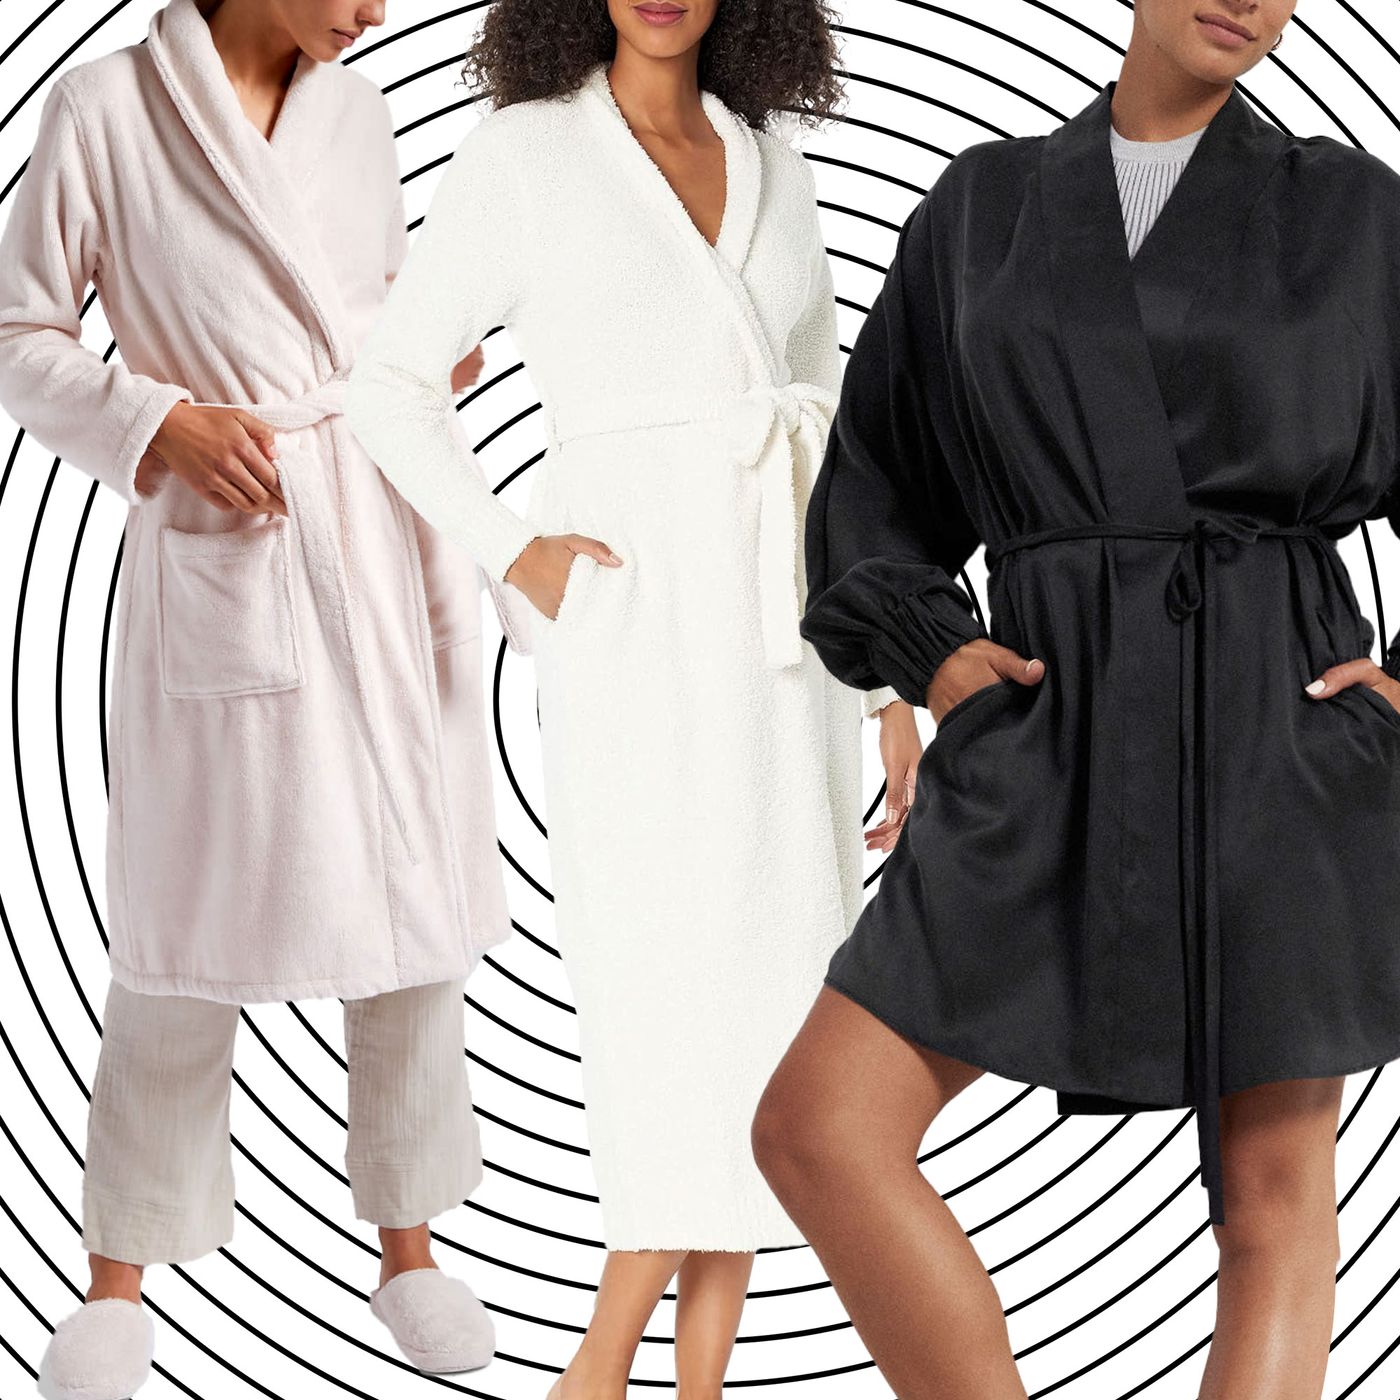 Ladies Thermal Dressing Gown - Ice Grey – Heat Holders